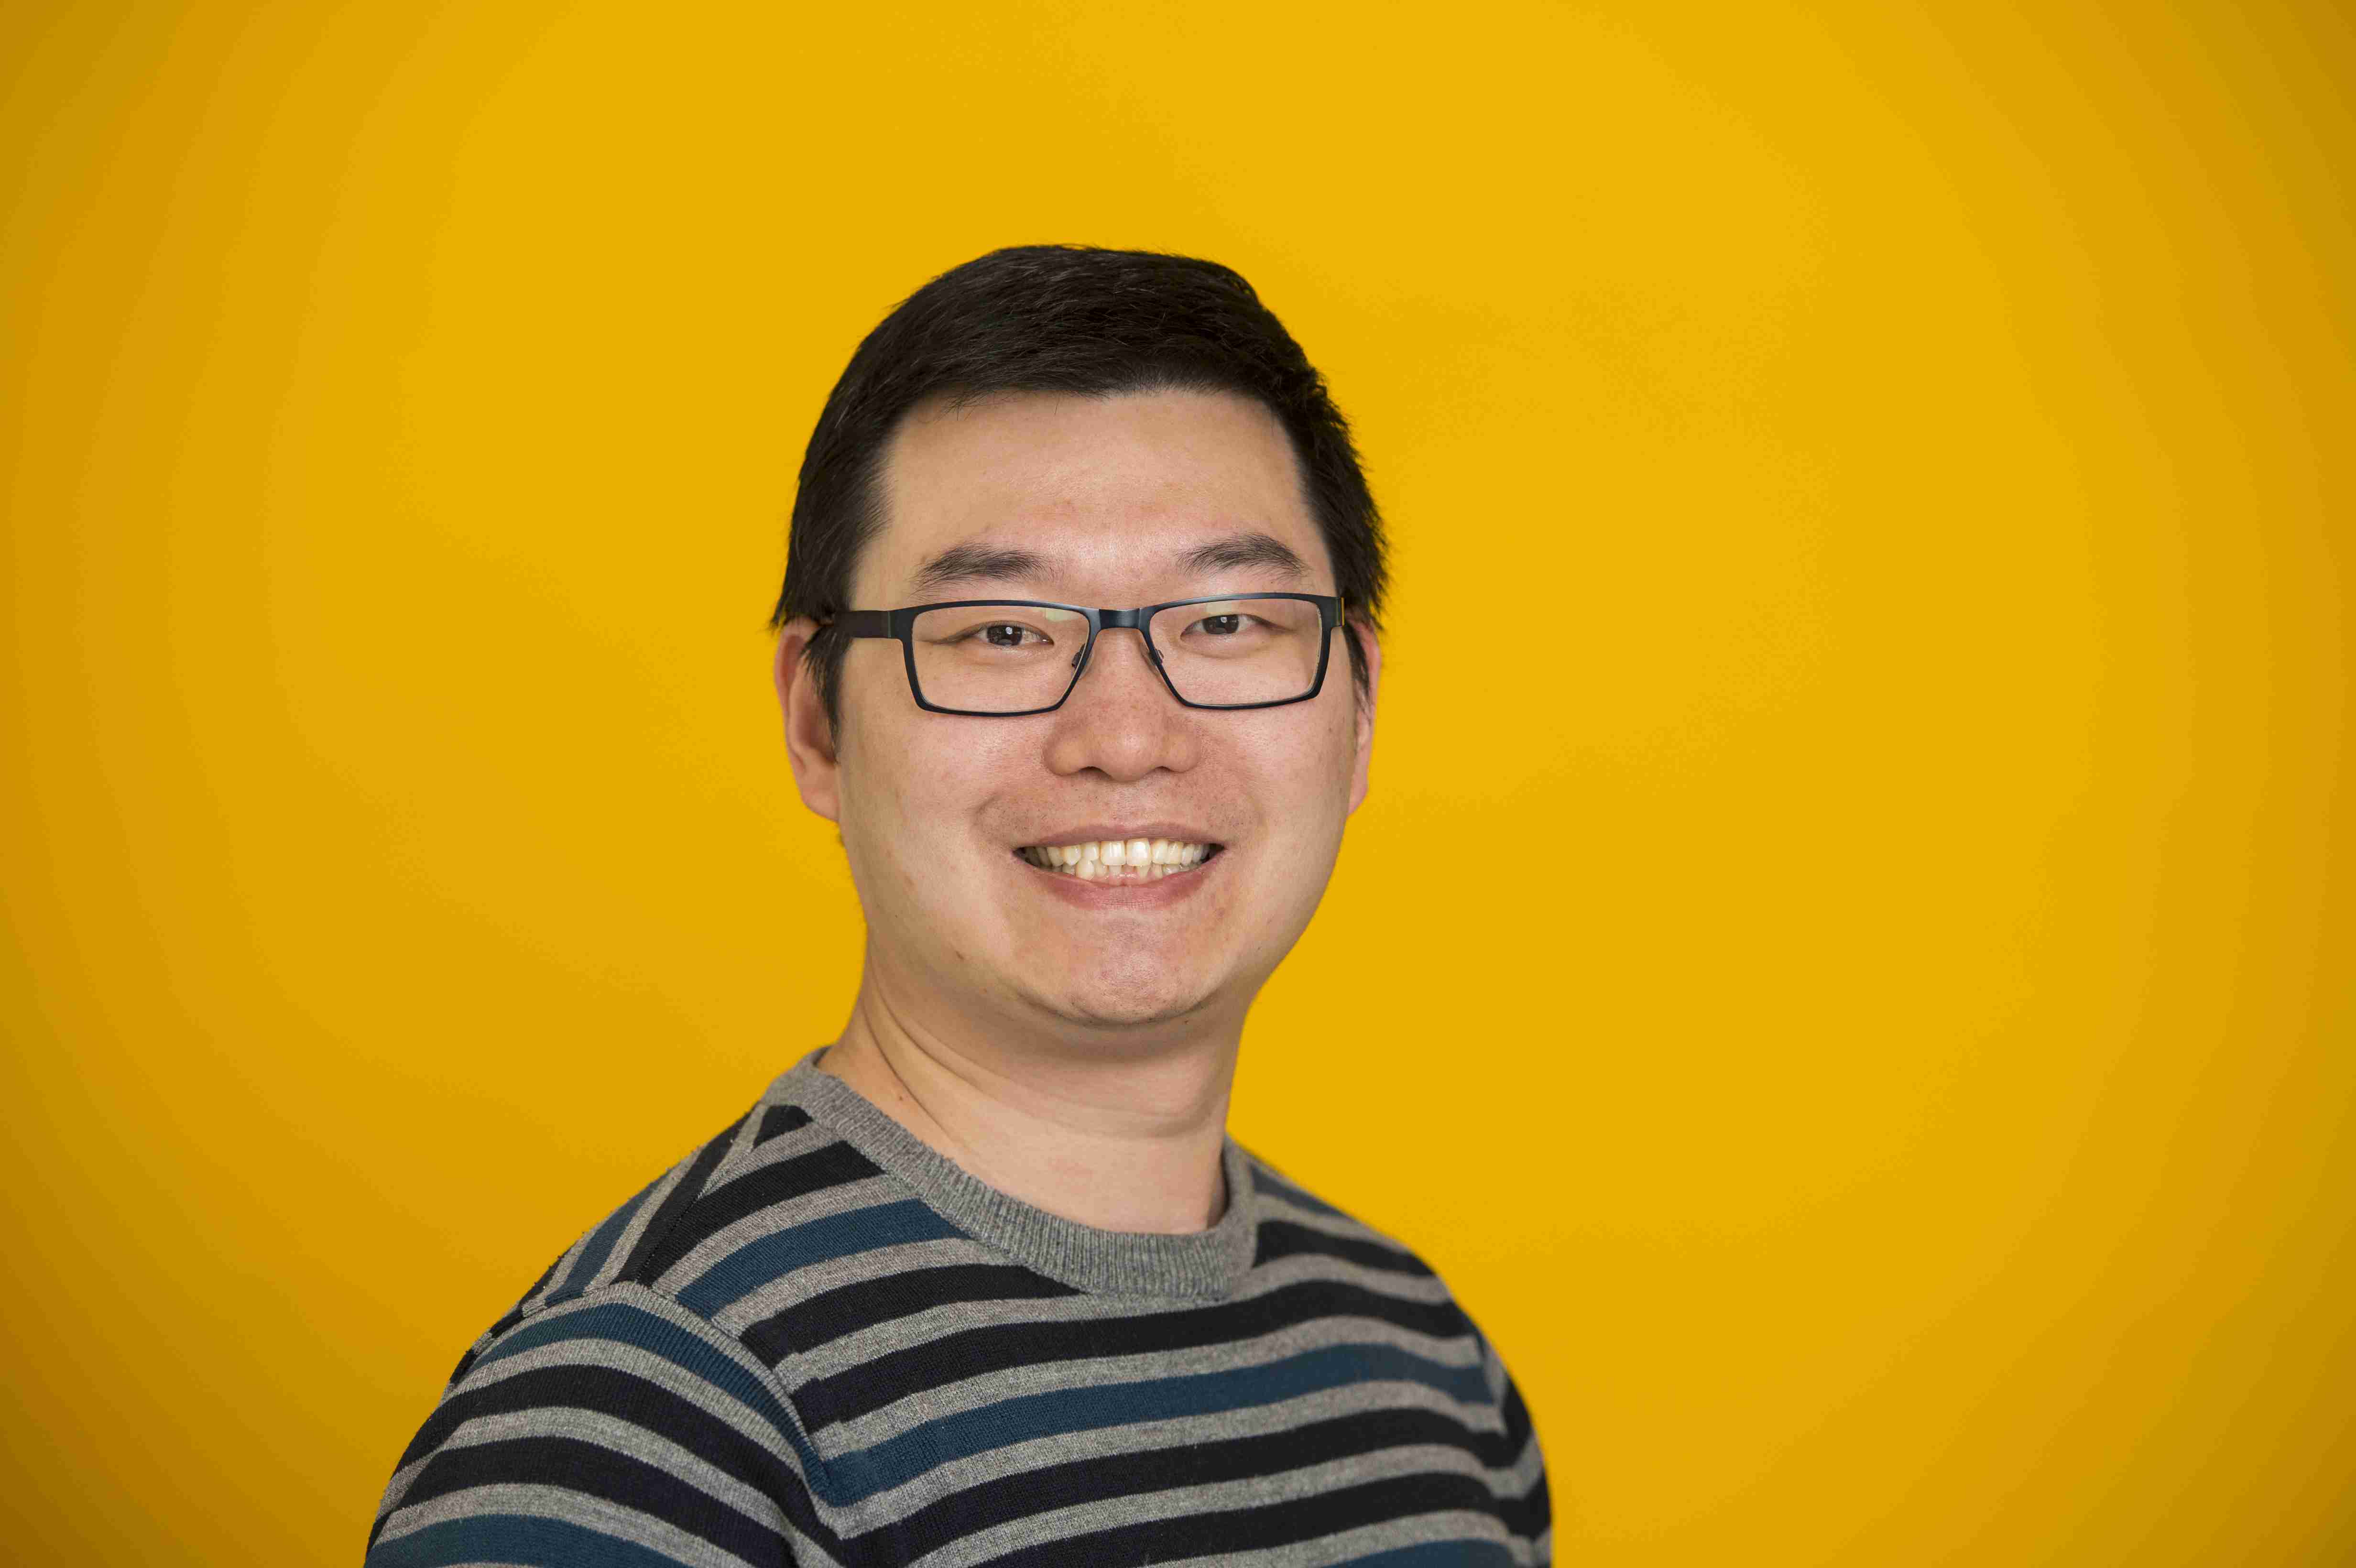 Profile image of Dr Thomas Tan